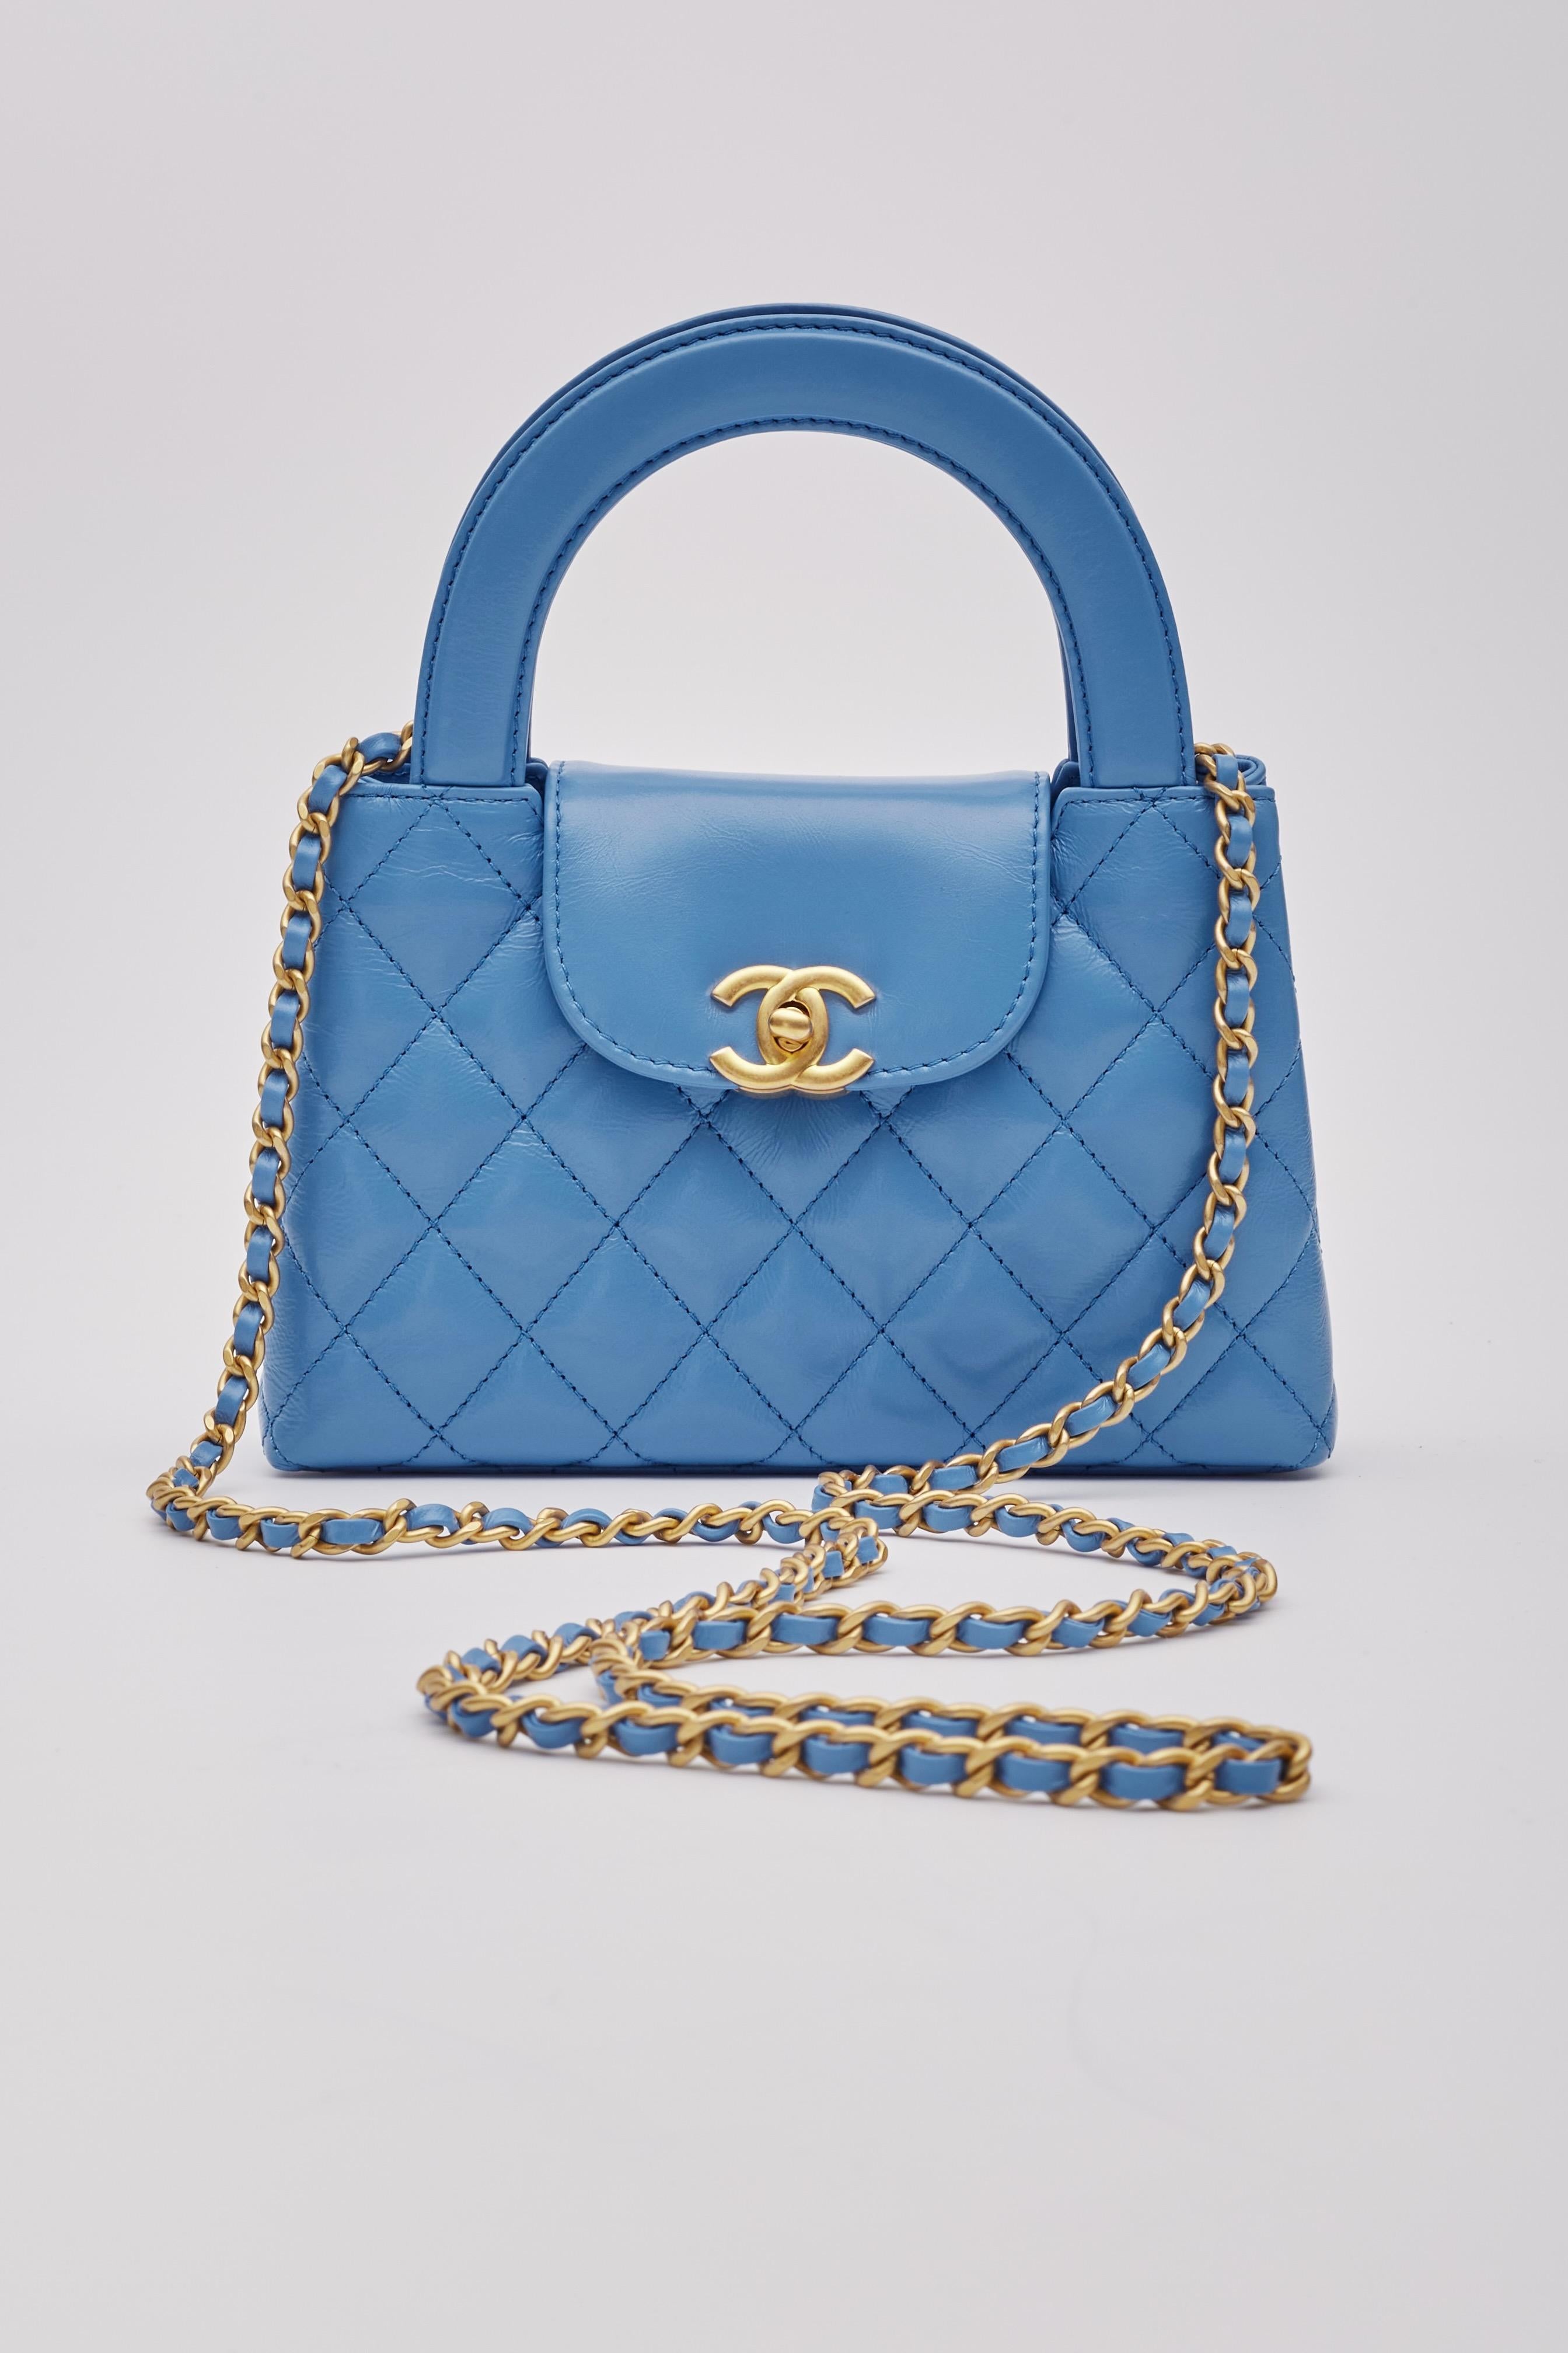 Chanel Blue Calfskin Mini Shopping Kelly Bag For Sale 6